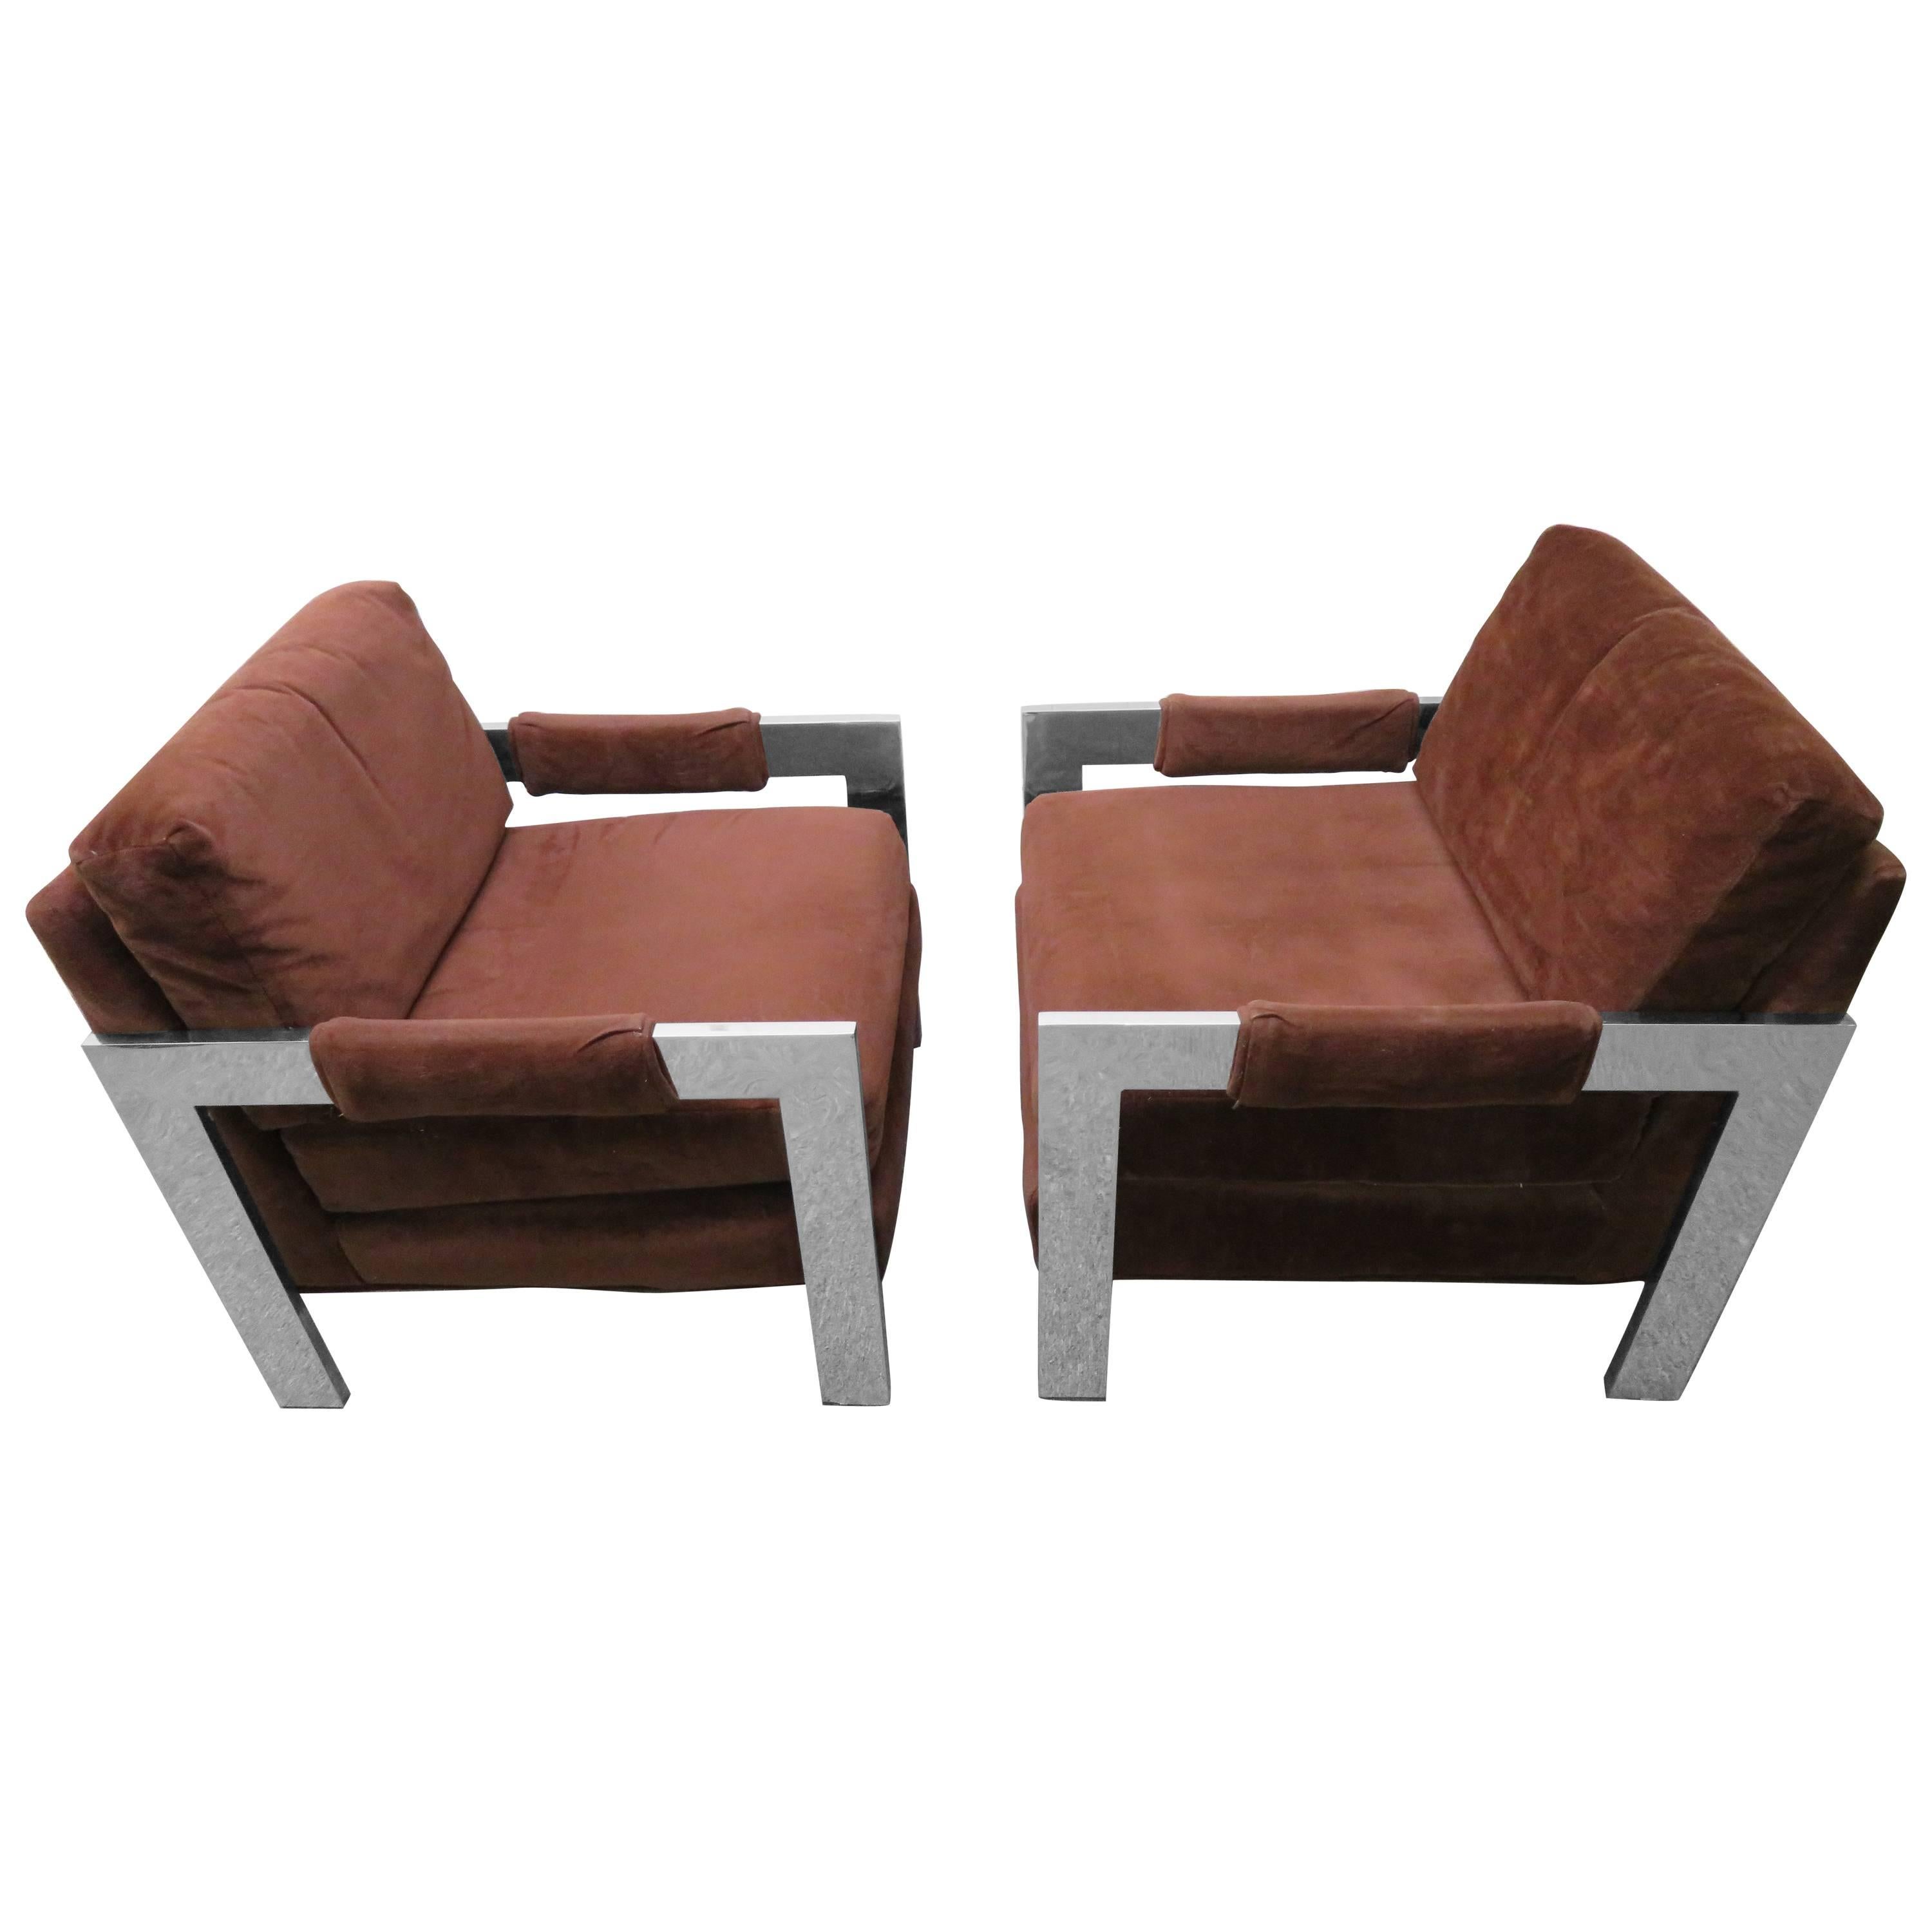 Chunky Chrome Pair Milo Baughman StyleLounge Chairs, Mid-Century Modern For Sale